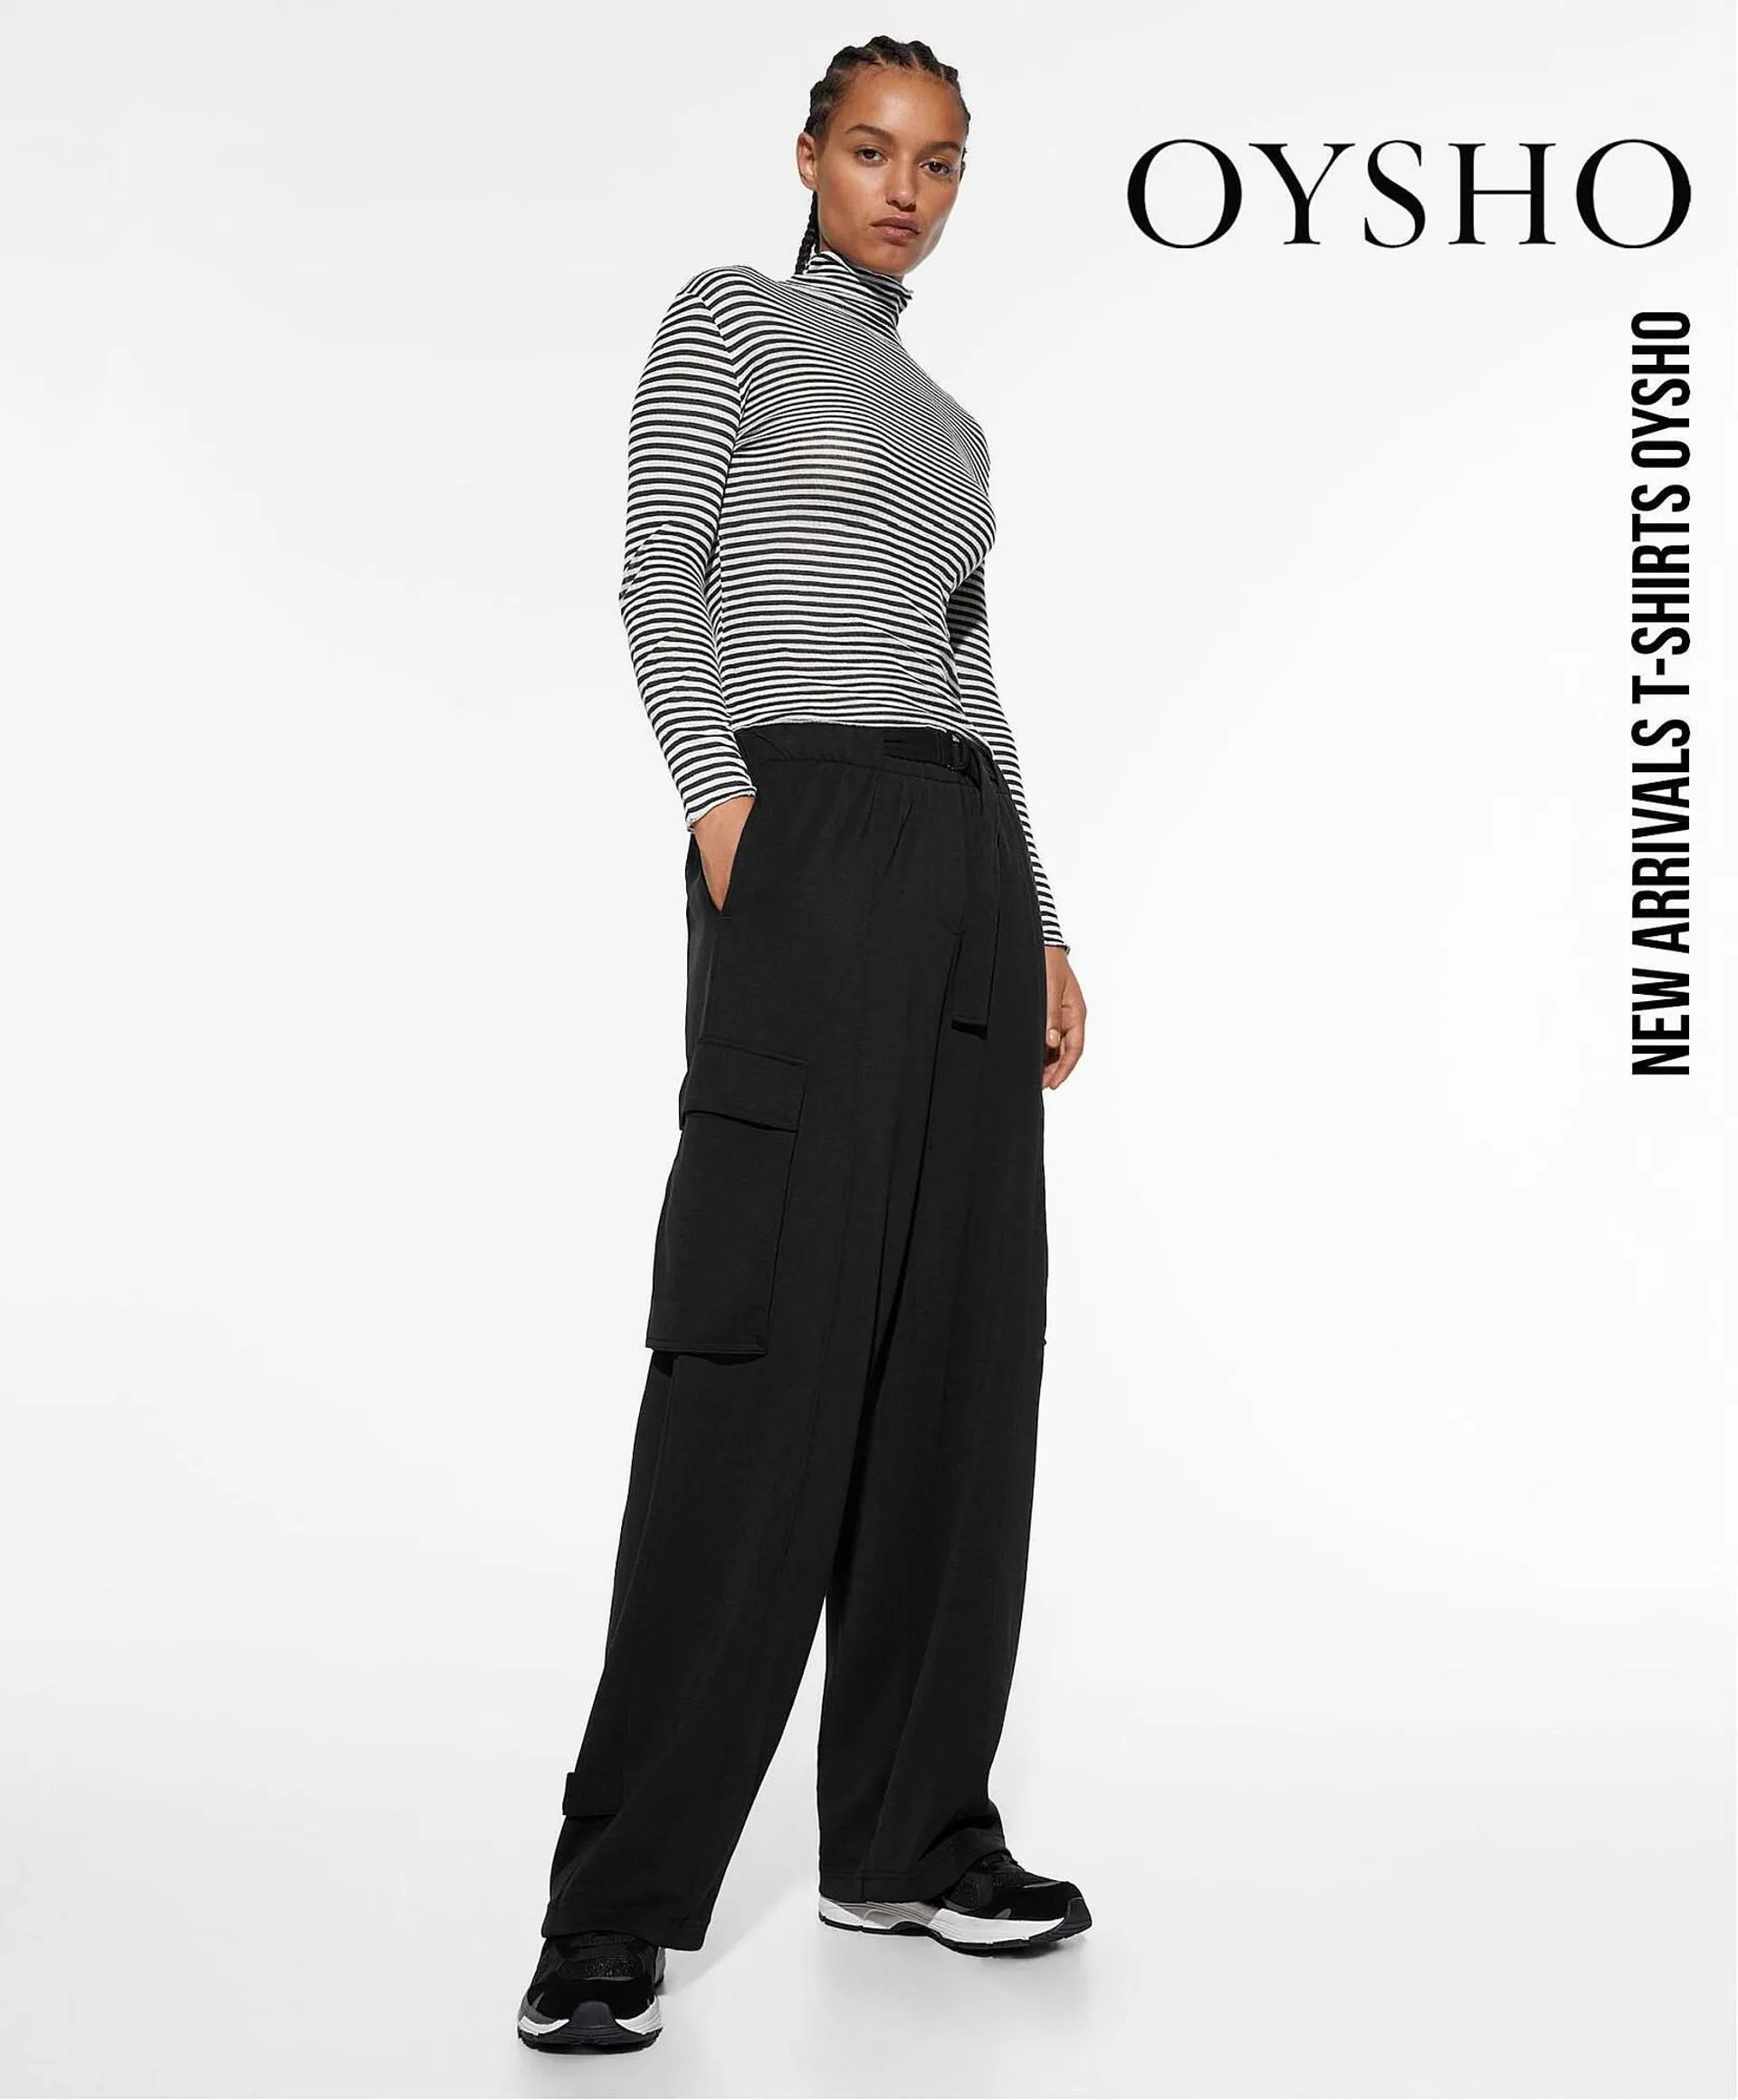 Oysho catalogue - 1